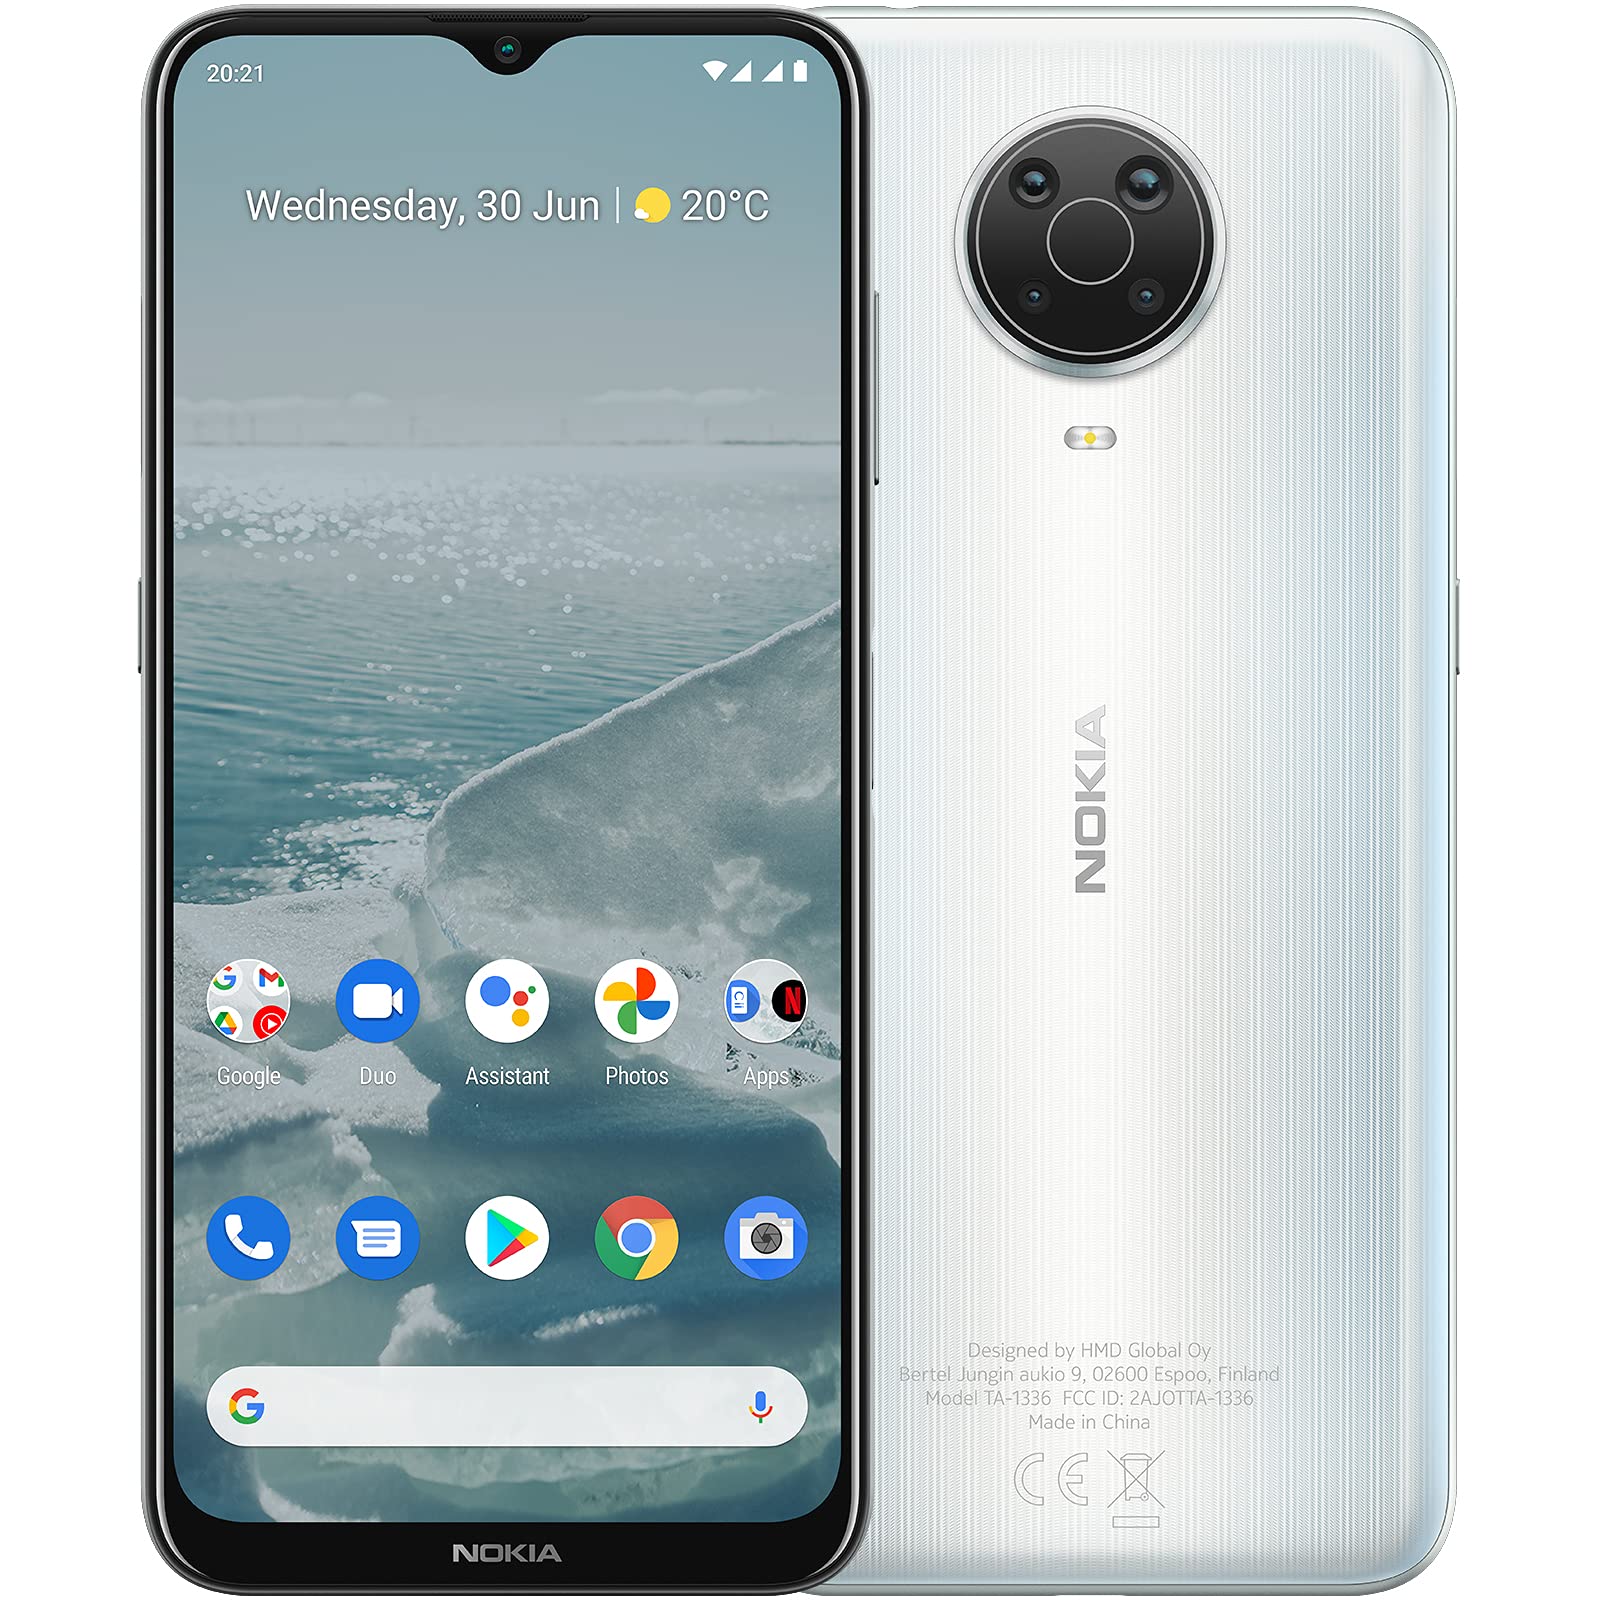 Nokia G20 | Android 11 | Unlocked Smartphone | 3-Day Battery | Dual SIM | US Version | 4/128GB | 6.52-Inch Screen | 48MP Quad Camera | Glacier